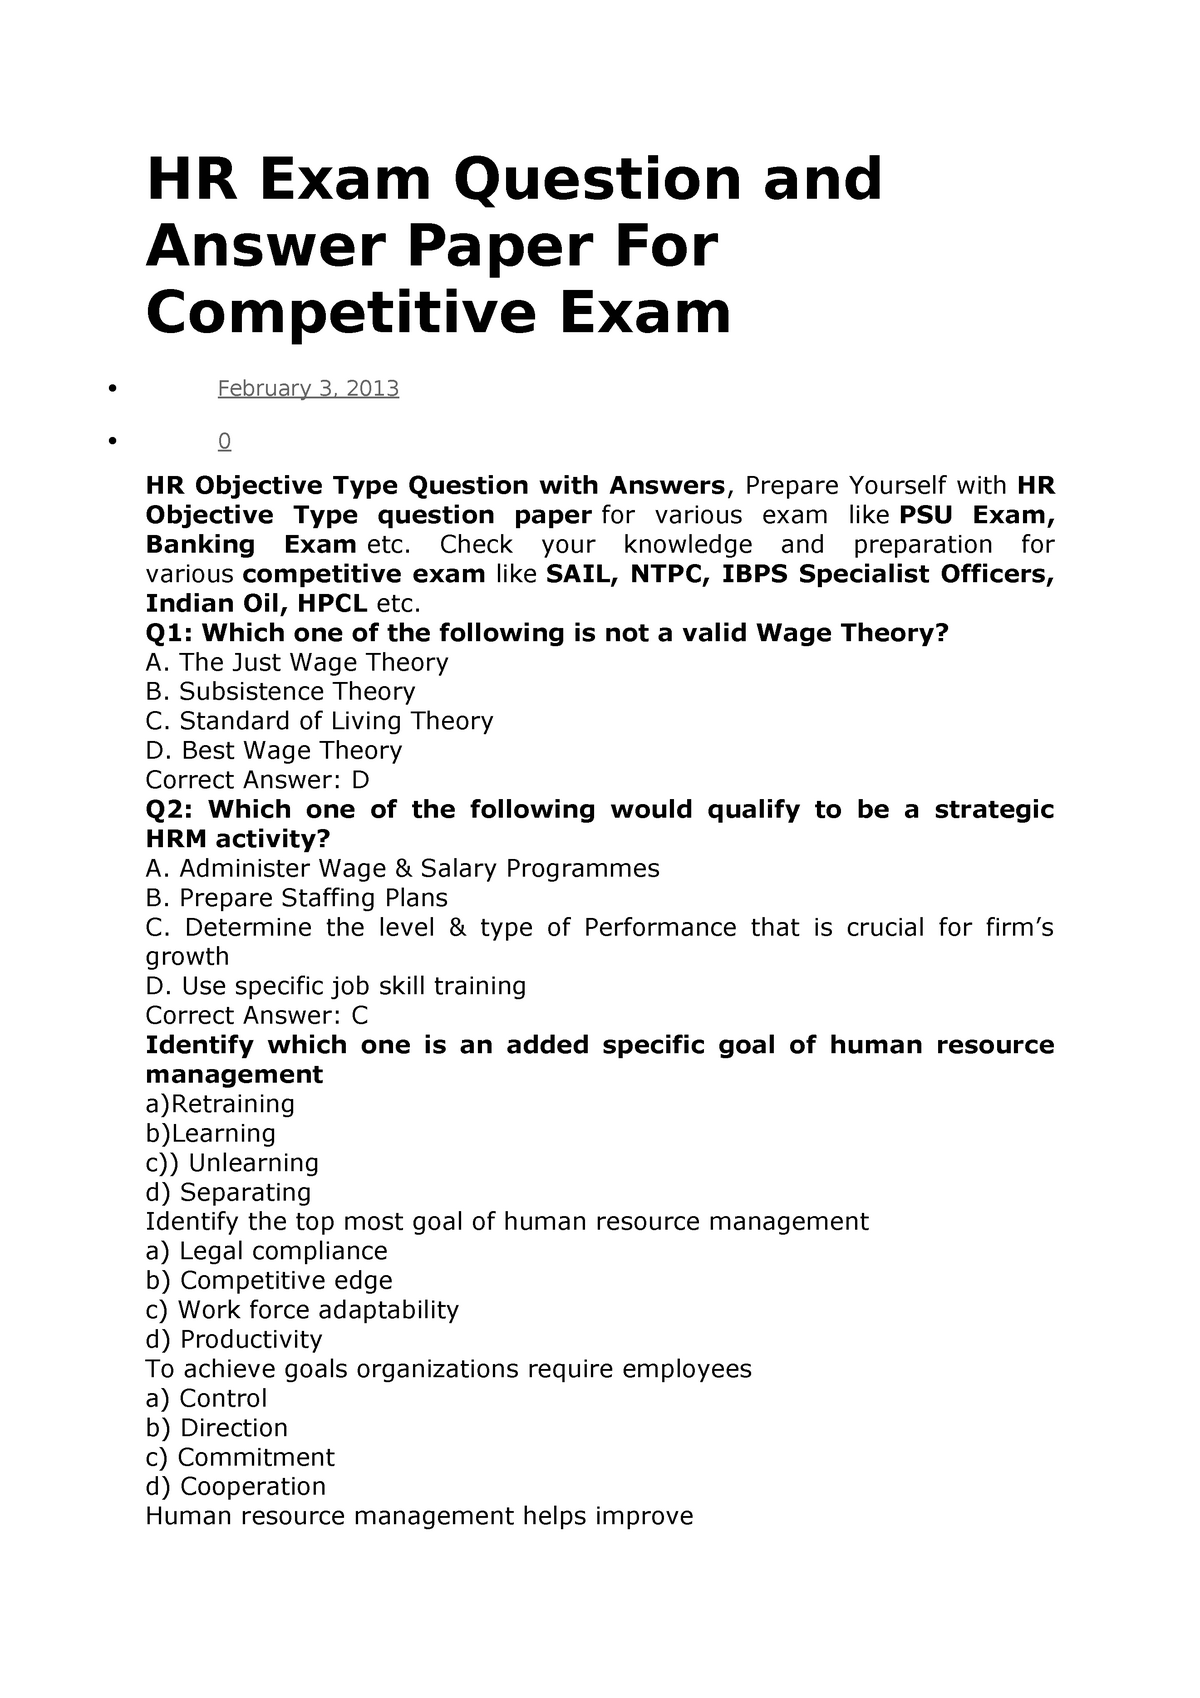 essay on competitive exam